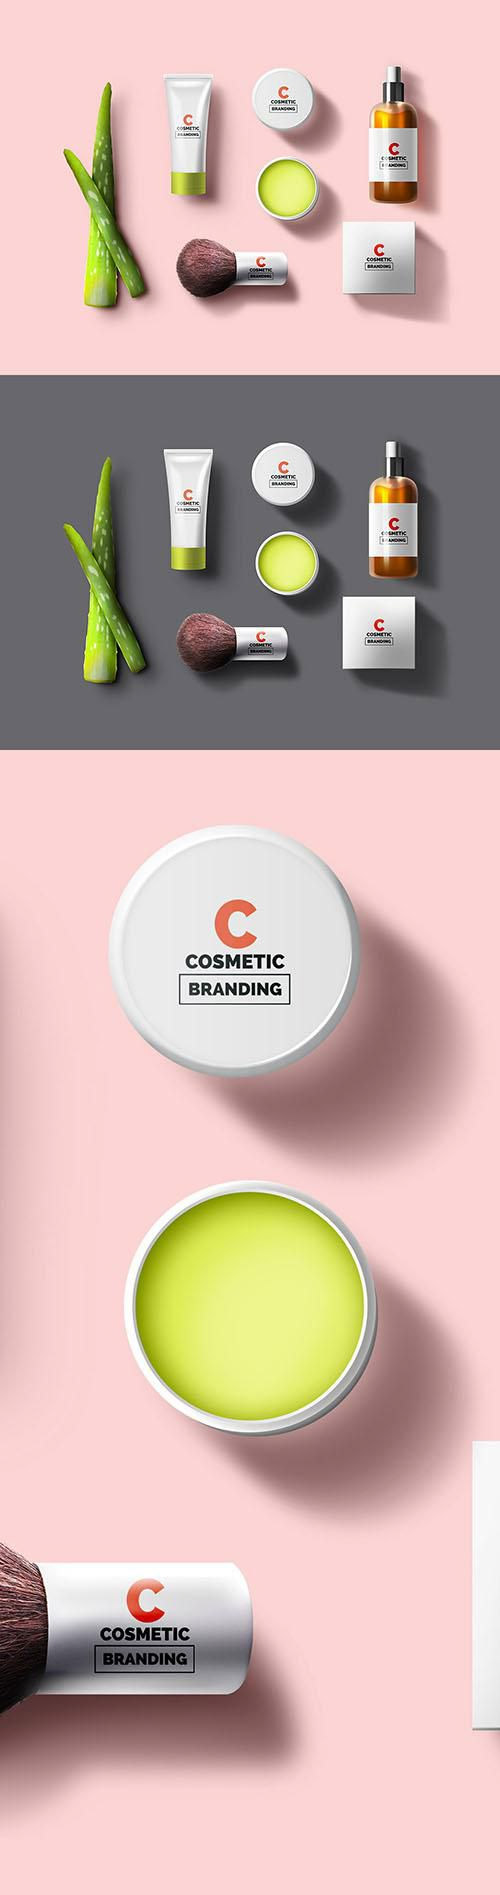 Cosmetic Branding Mockup